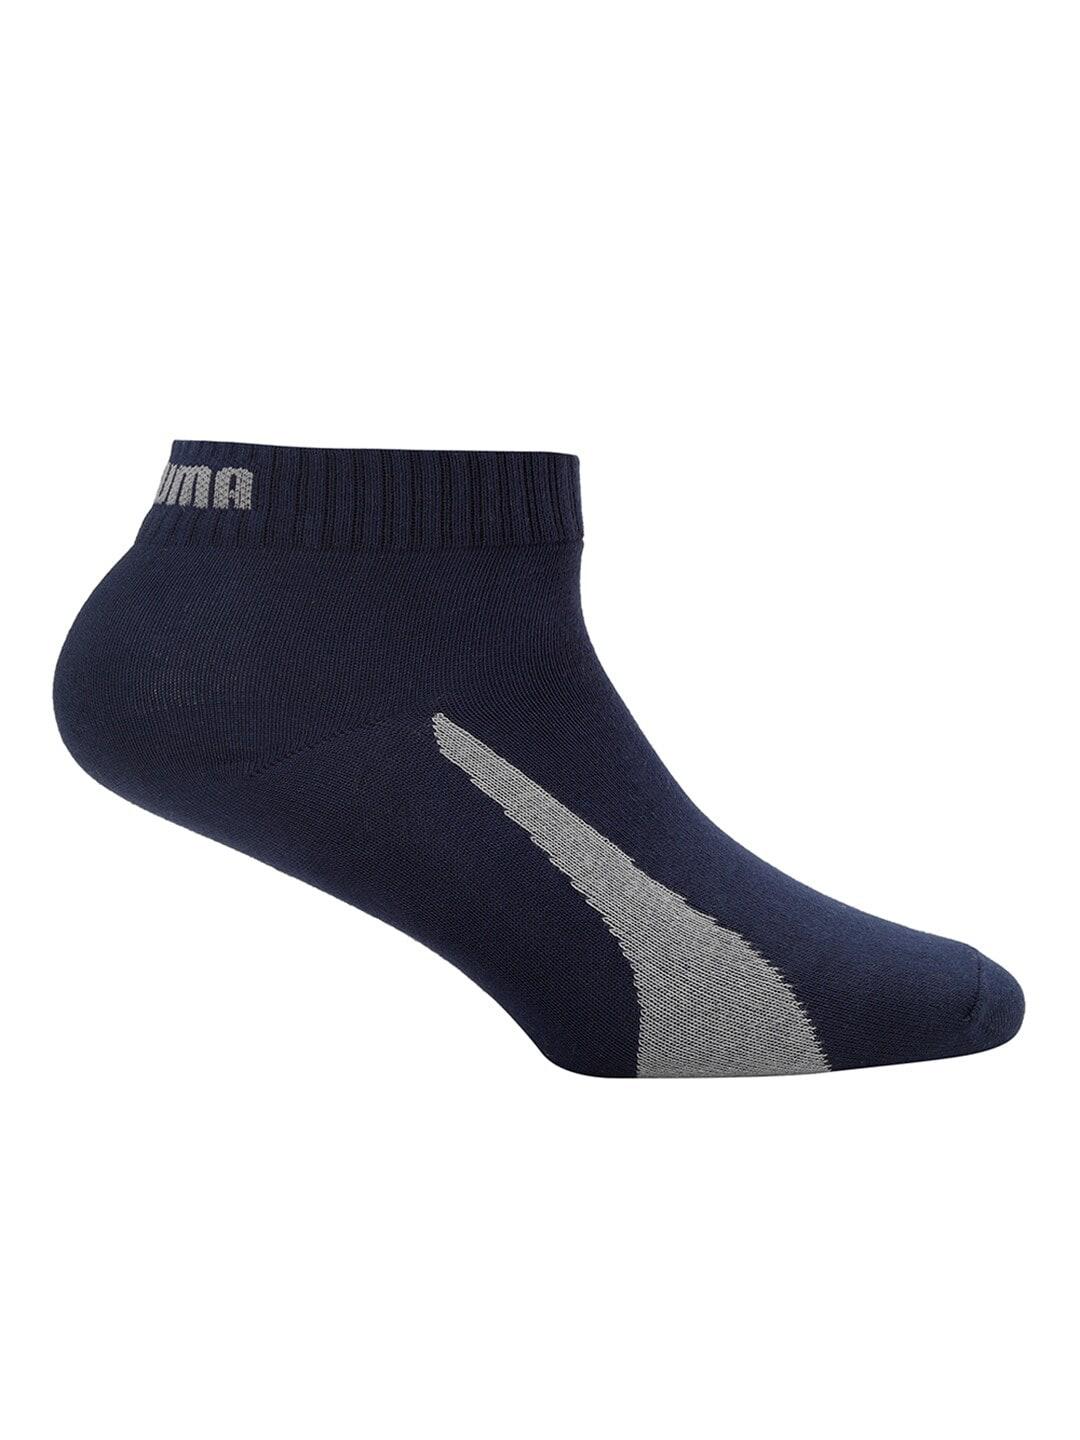 puma navy blue ankle-length socks